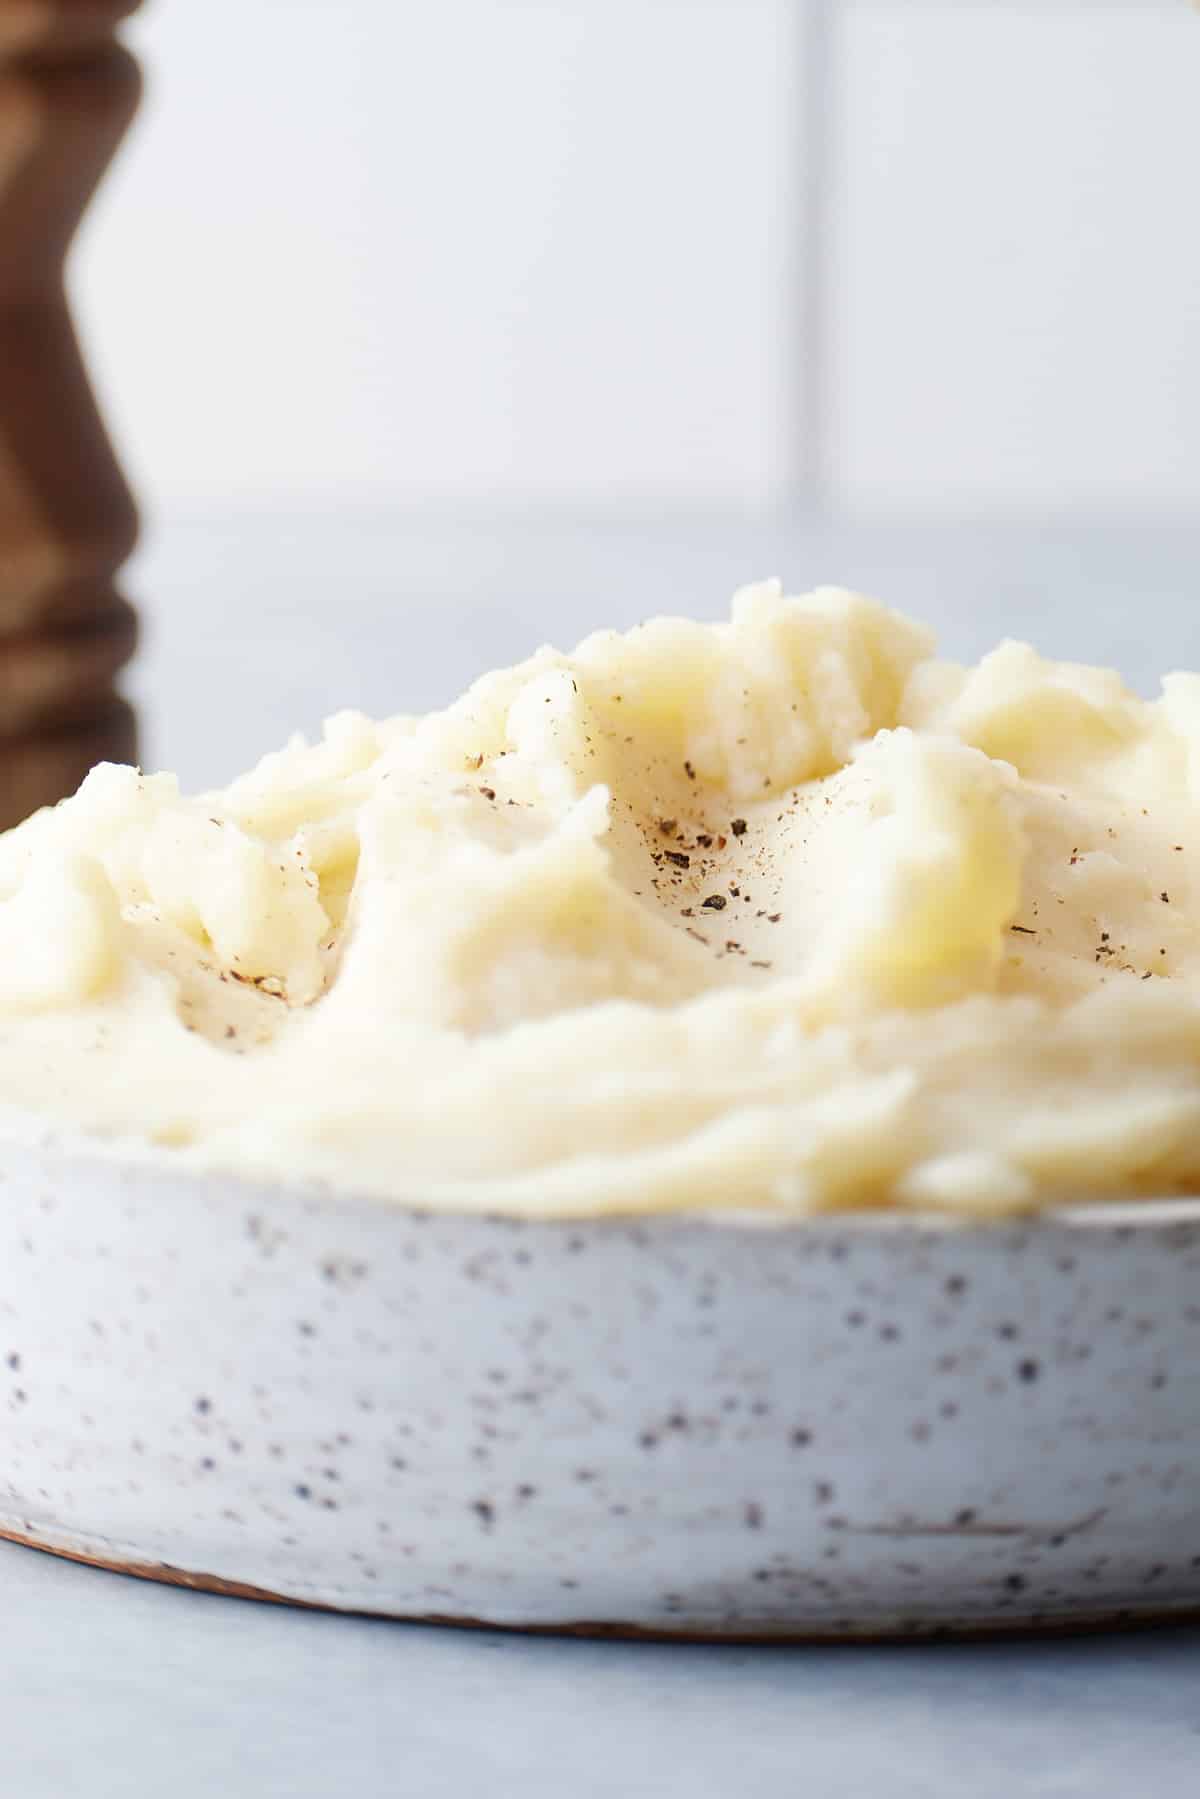 Electric Potato Peeler Make Mashed Potatoes Easy